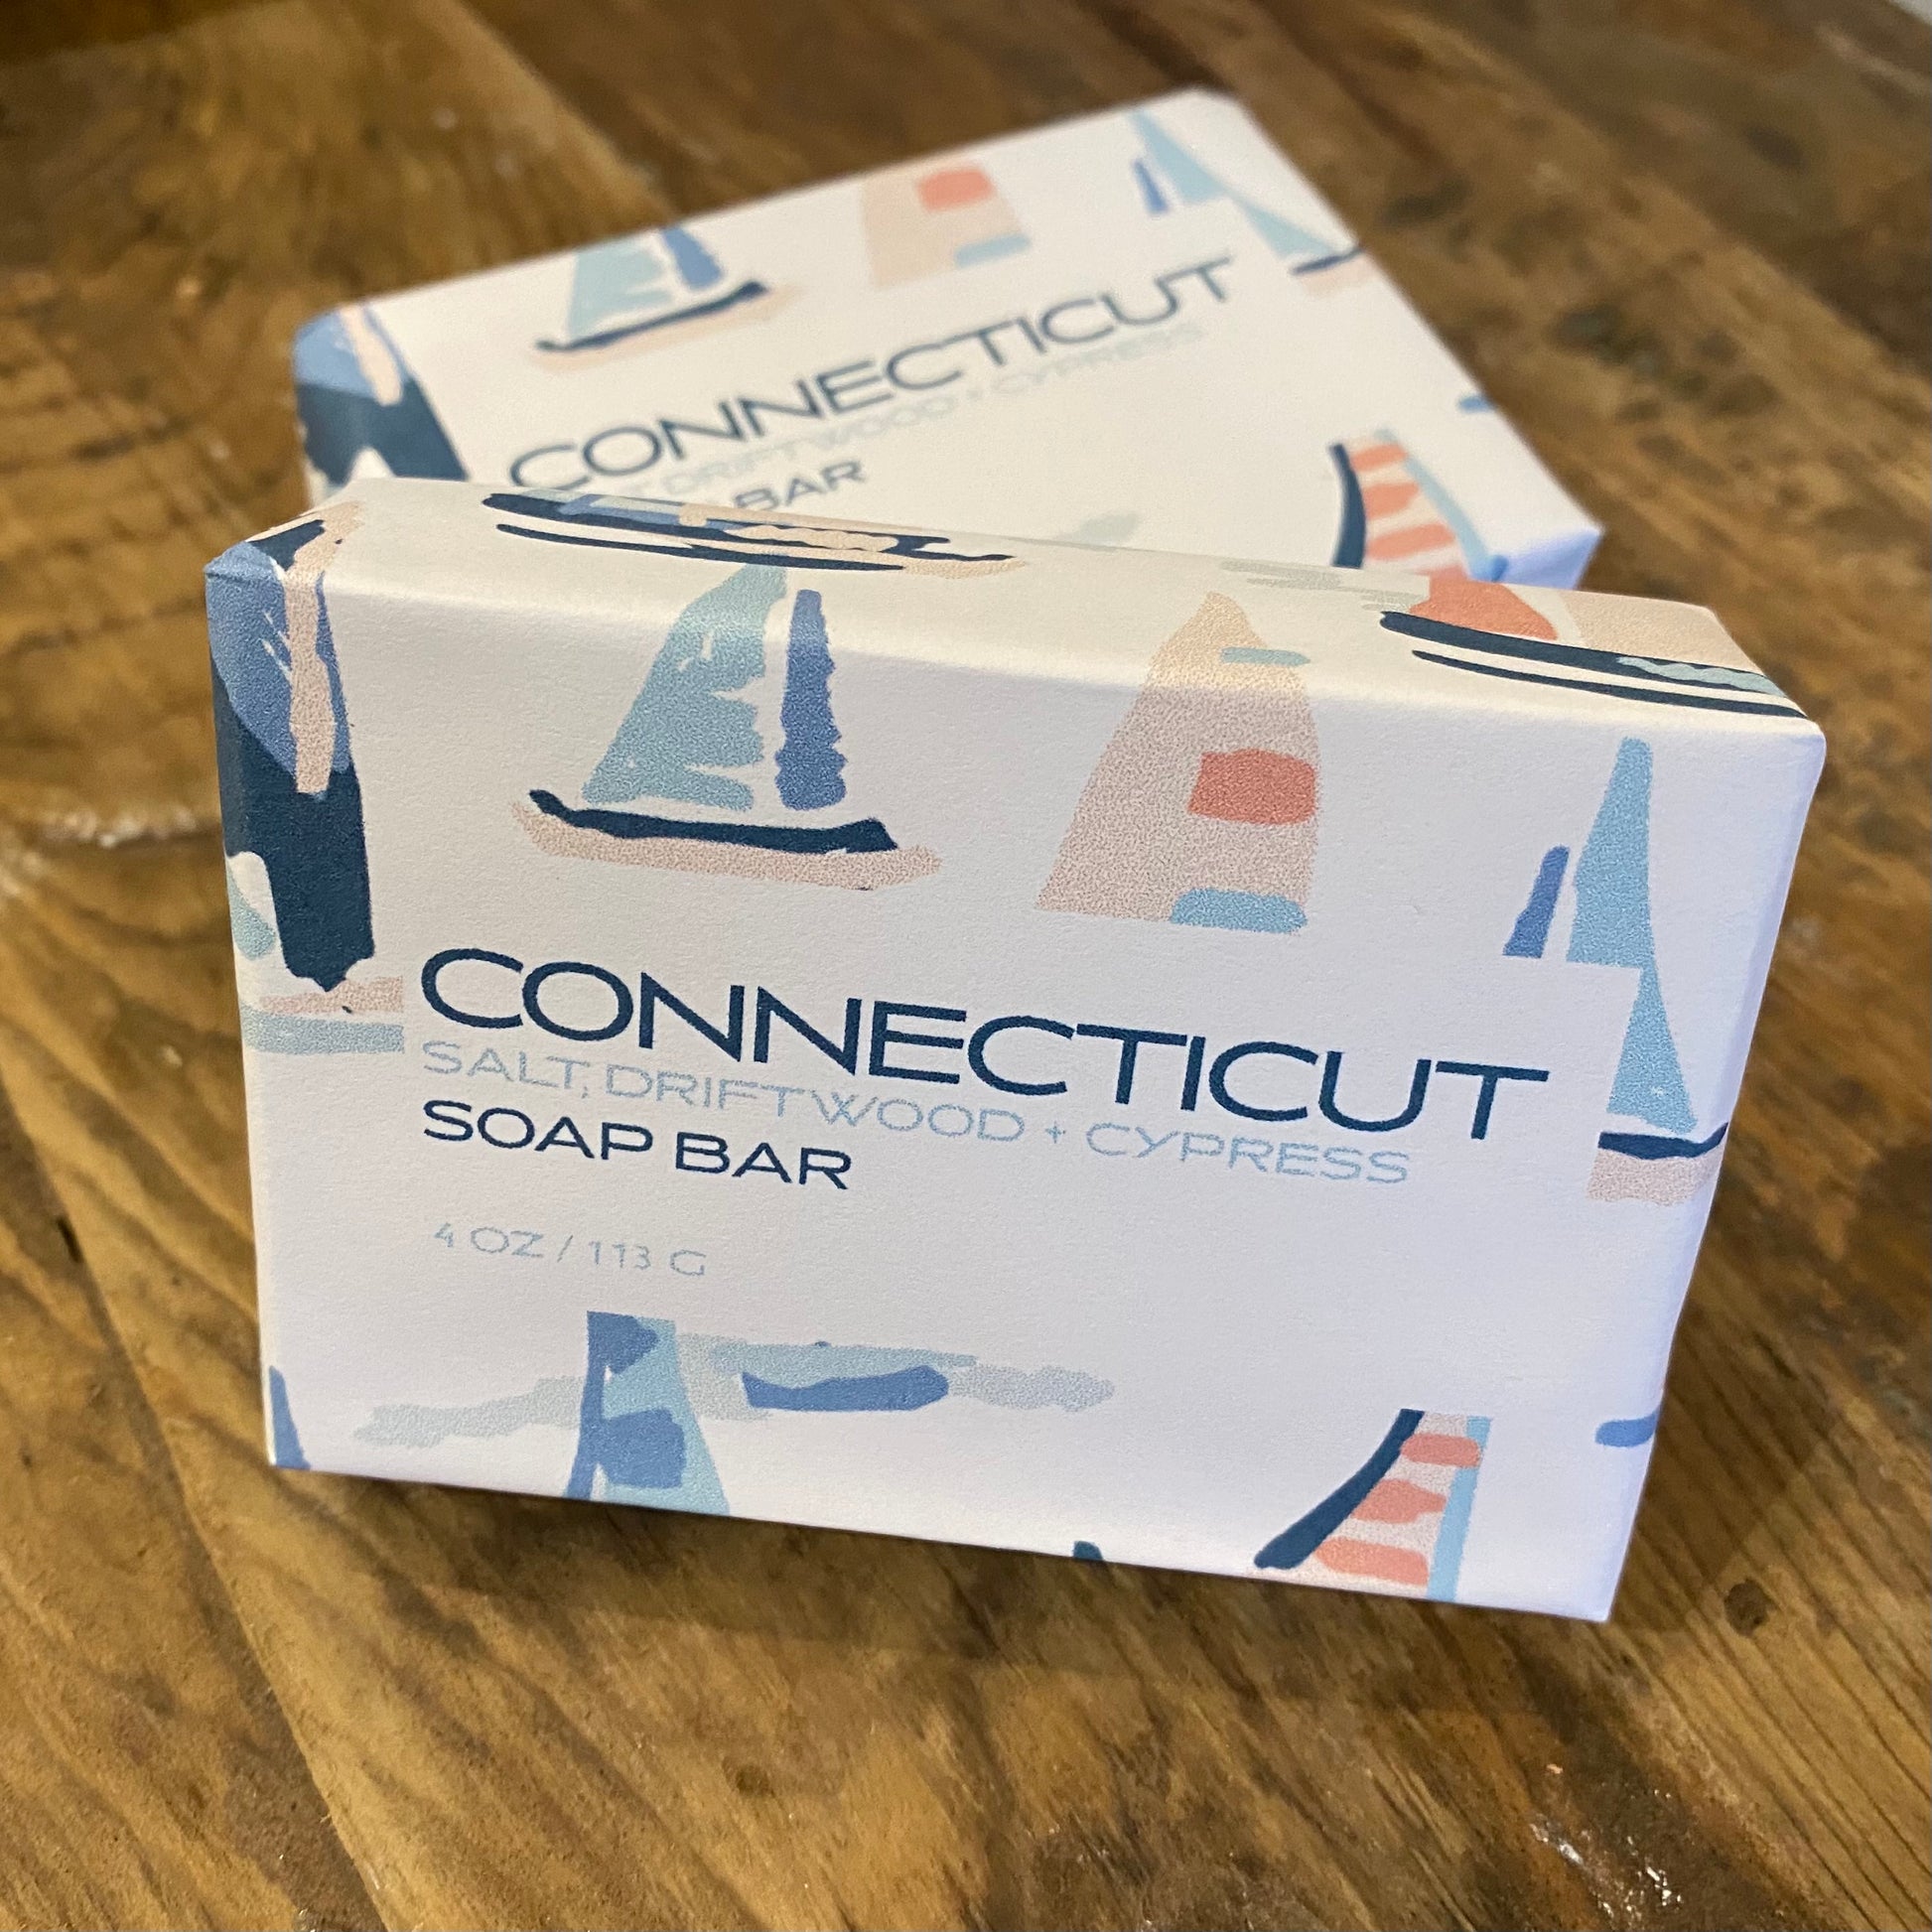 Connecticut - Salt, Driftwood and Cyprus Soap Bar - 4-oz. - Mellow Monkey